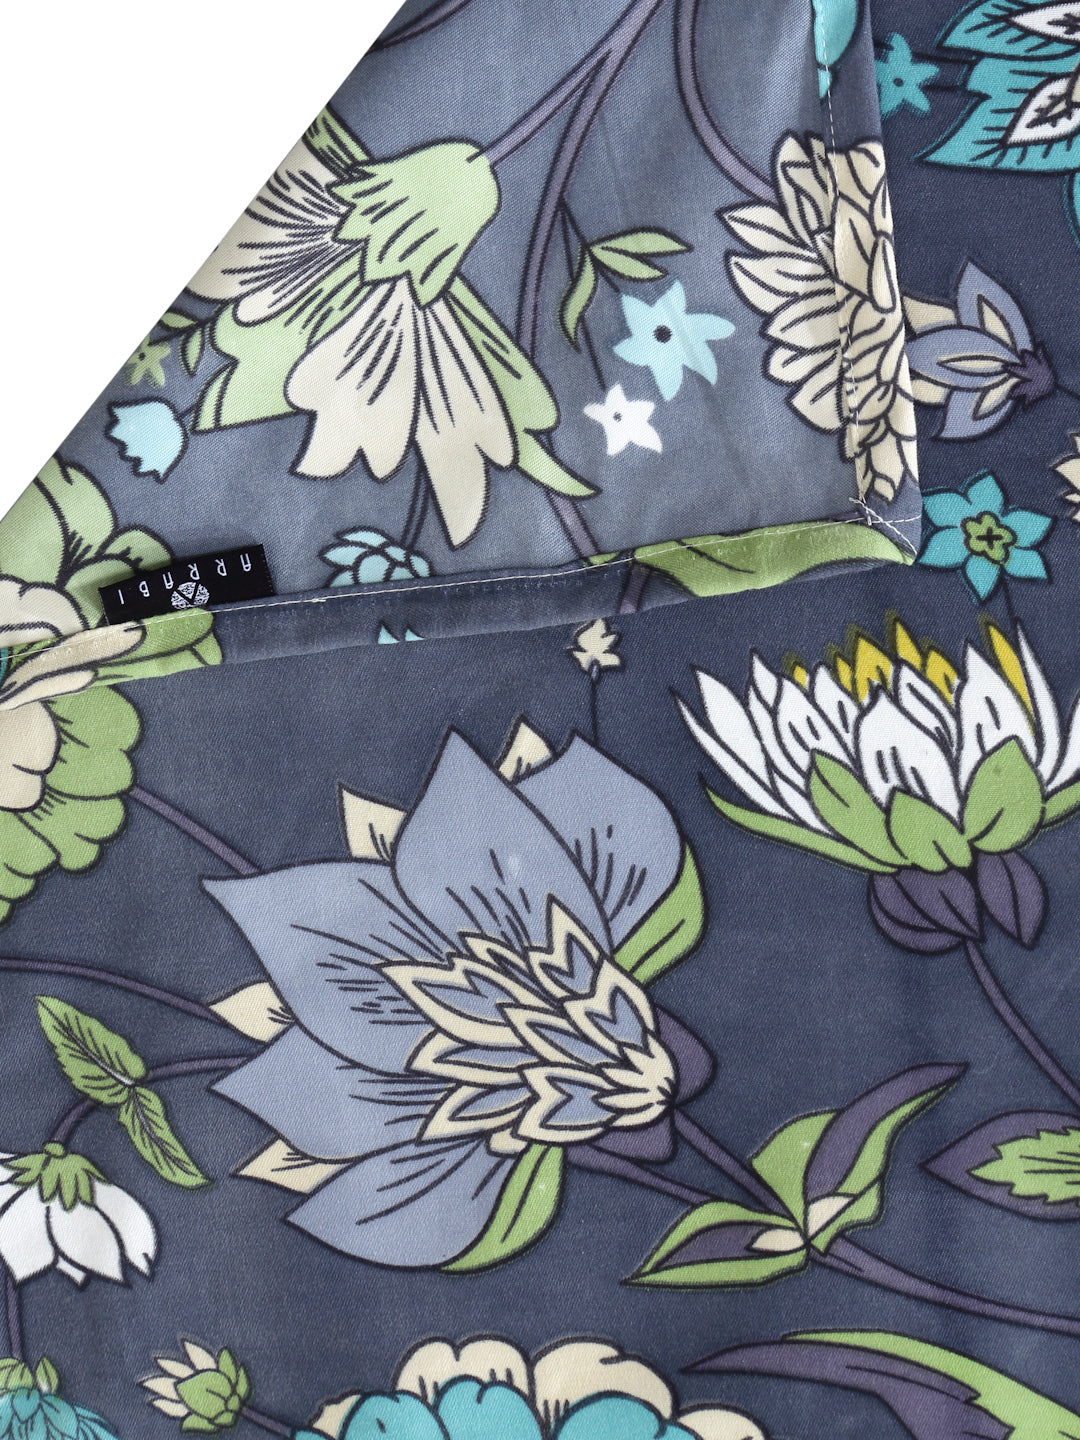 Arrabi Grey Floral TC Cotton Blend Super King Size Bedsheet with 2 Pillow Covers (270 X 260 cm)